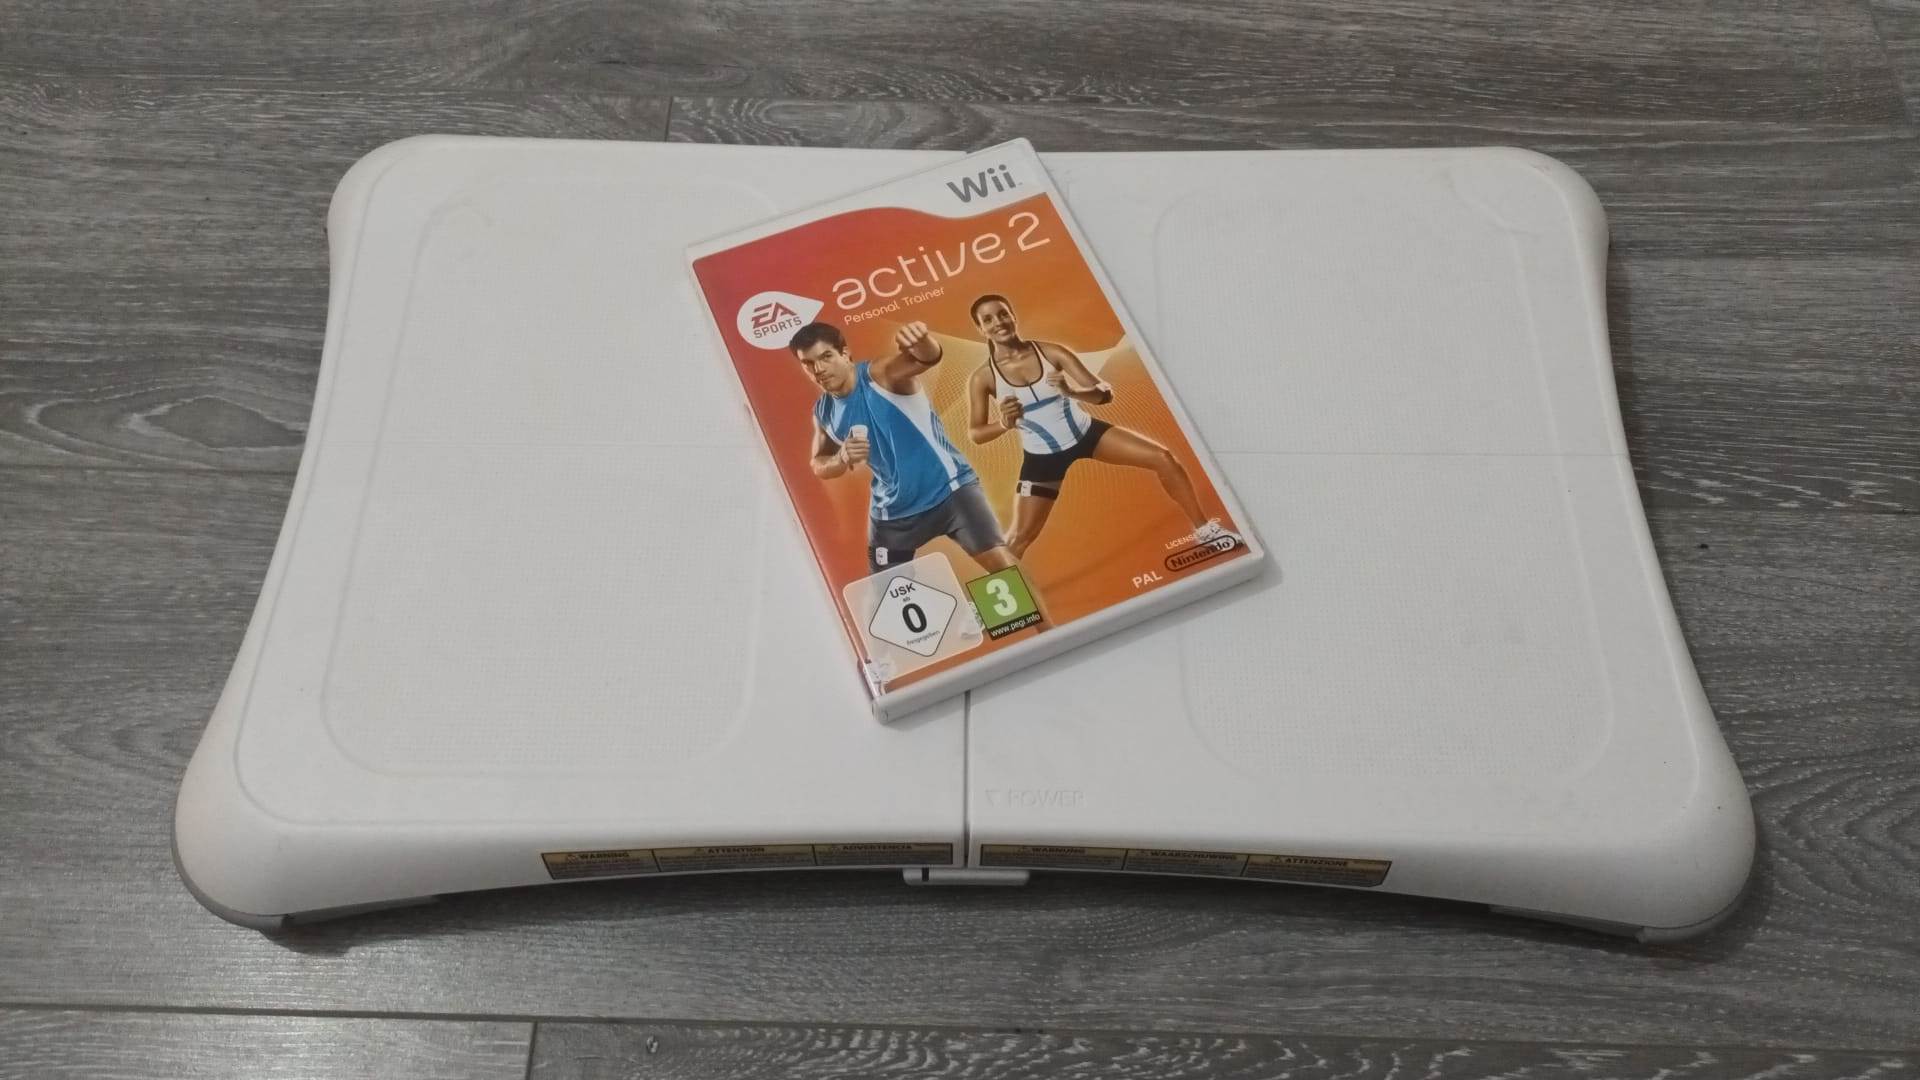 Wii Fit Ballance Board + EA Sports Active 2 - Nintendo Wii